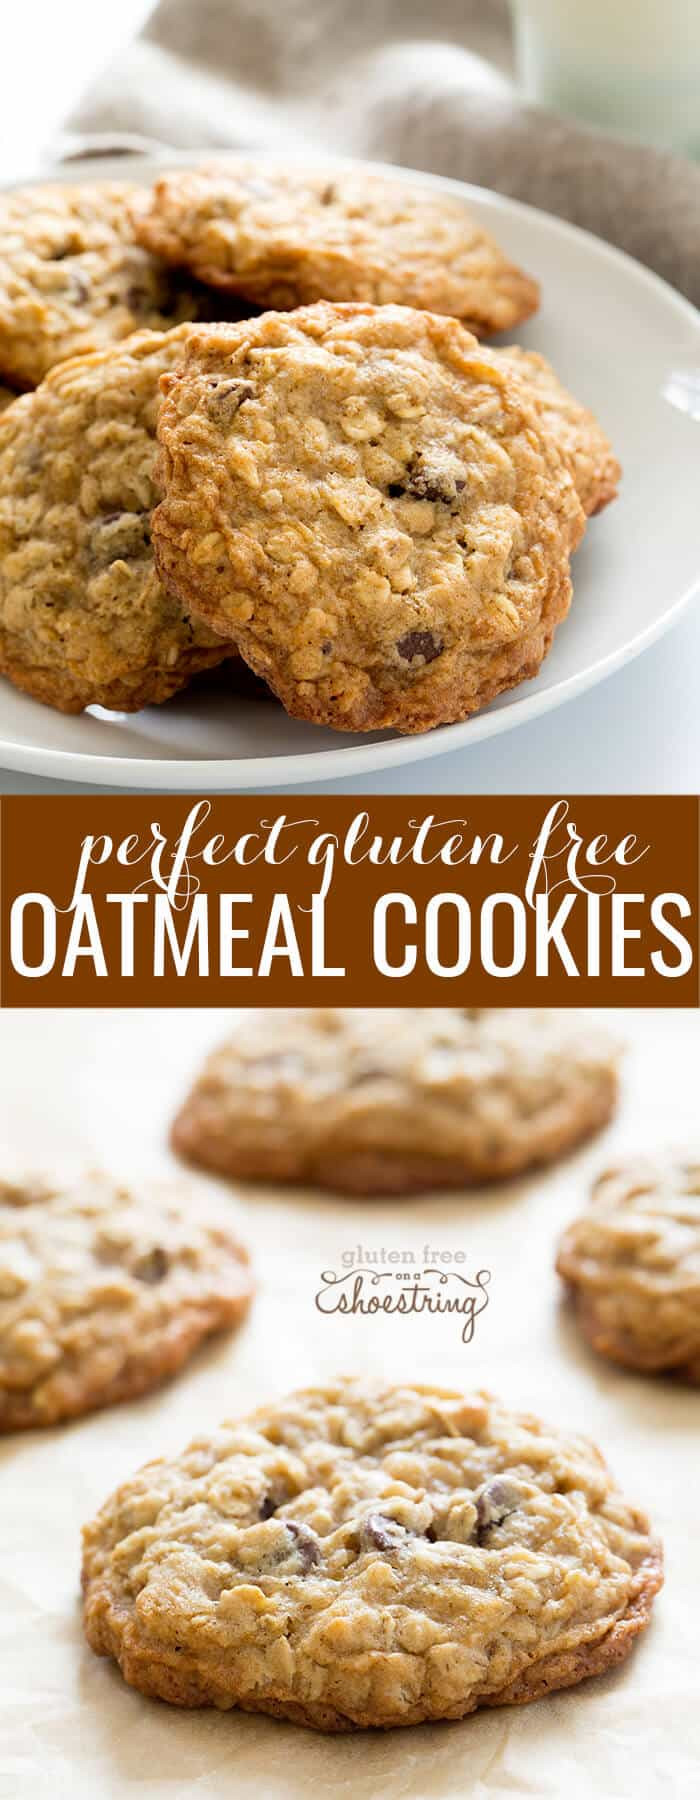 Gluten Free Oatmeal Cookies Recipe
 Gluten Free Oatmeal Cookies